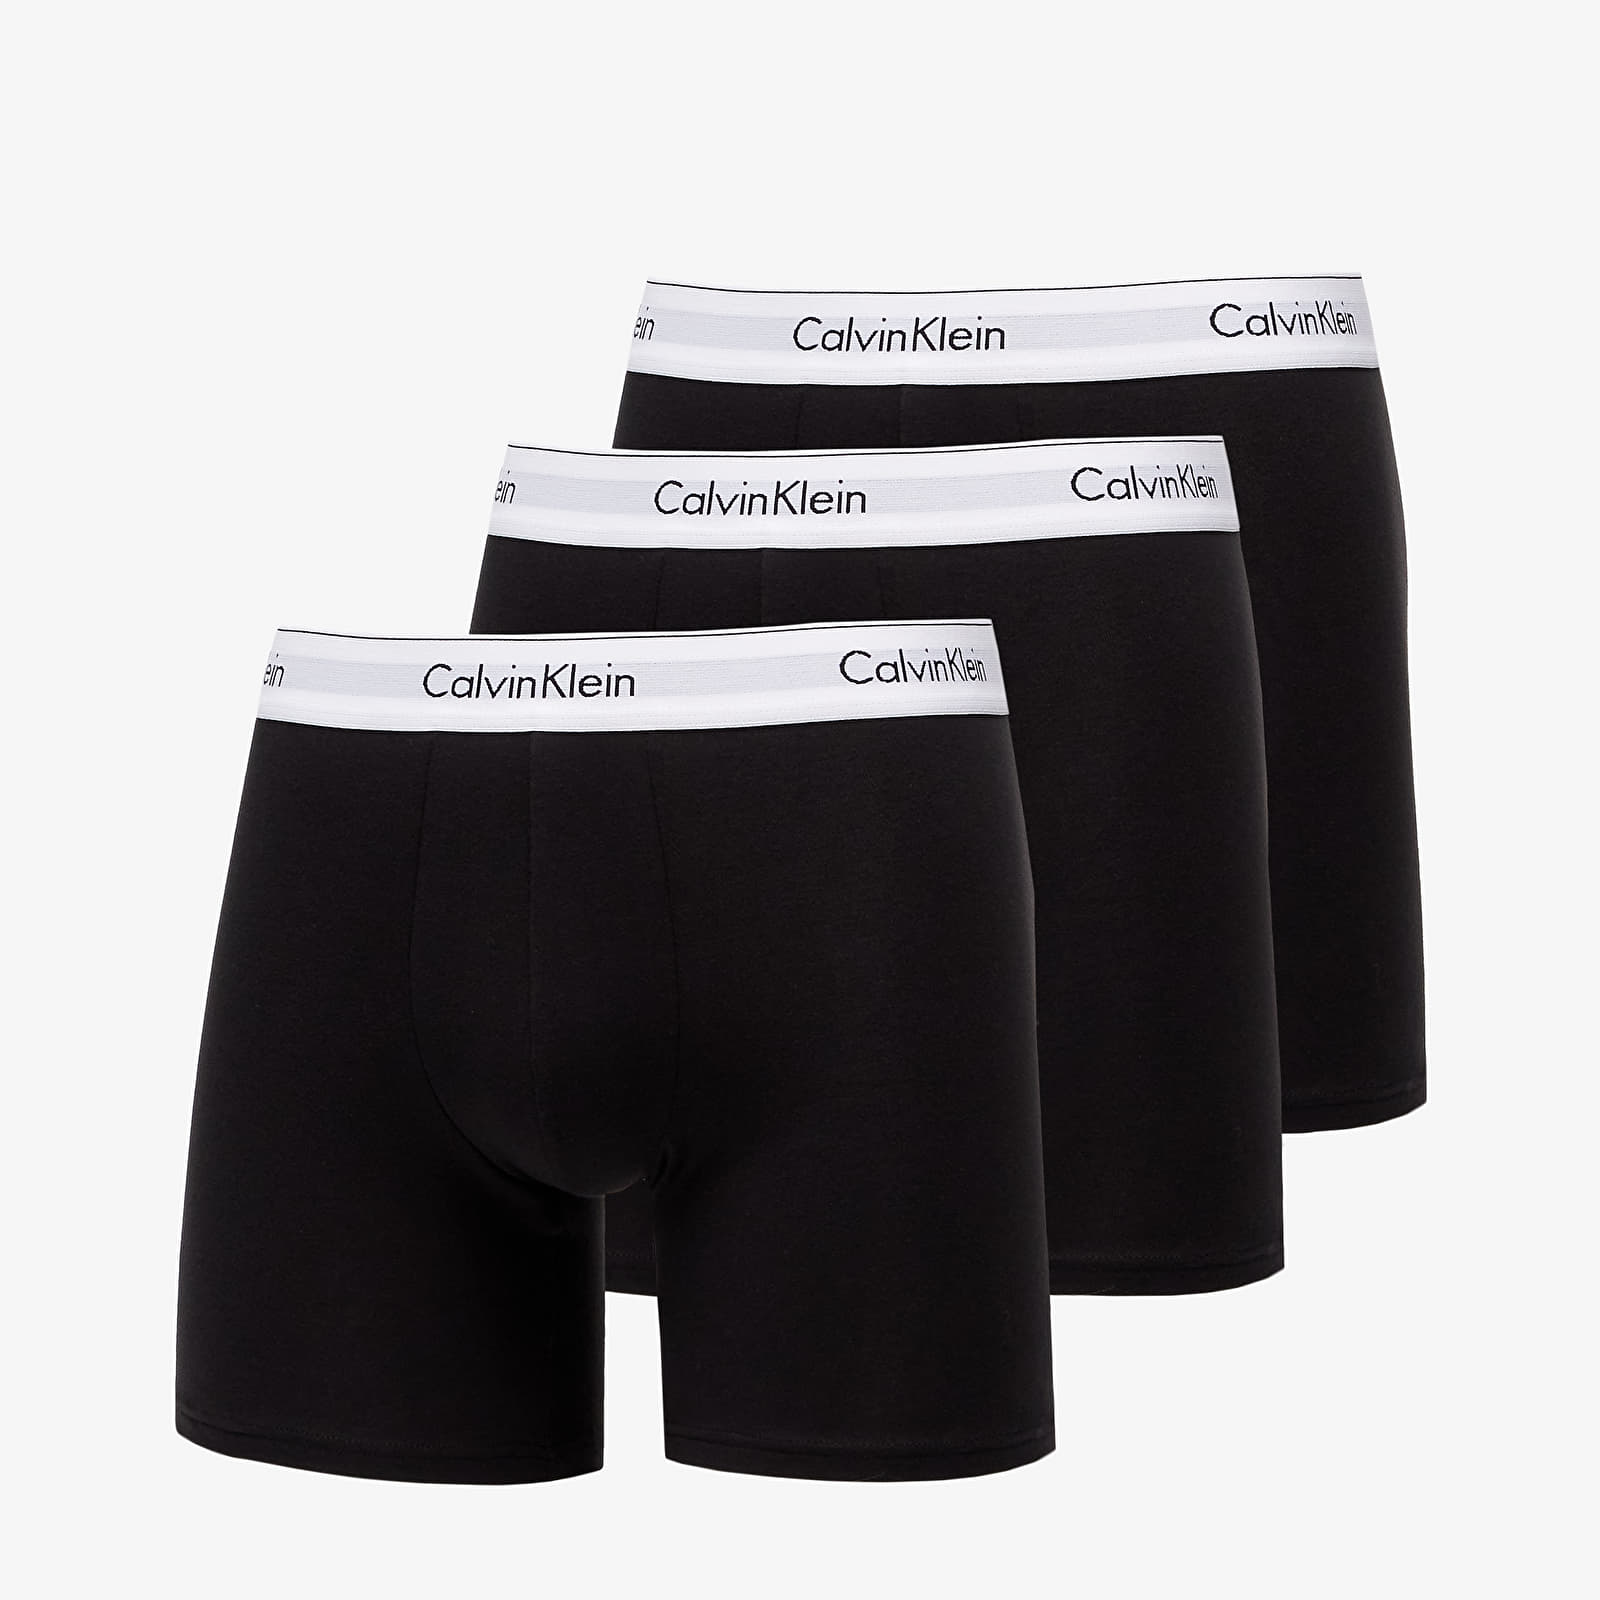 Boxer shorts Calvin Klein Modern Cotton Stretch Boxer Brief 3-Pack Black/  Black/ Black